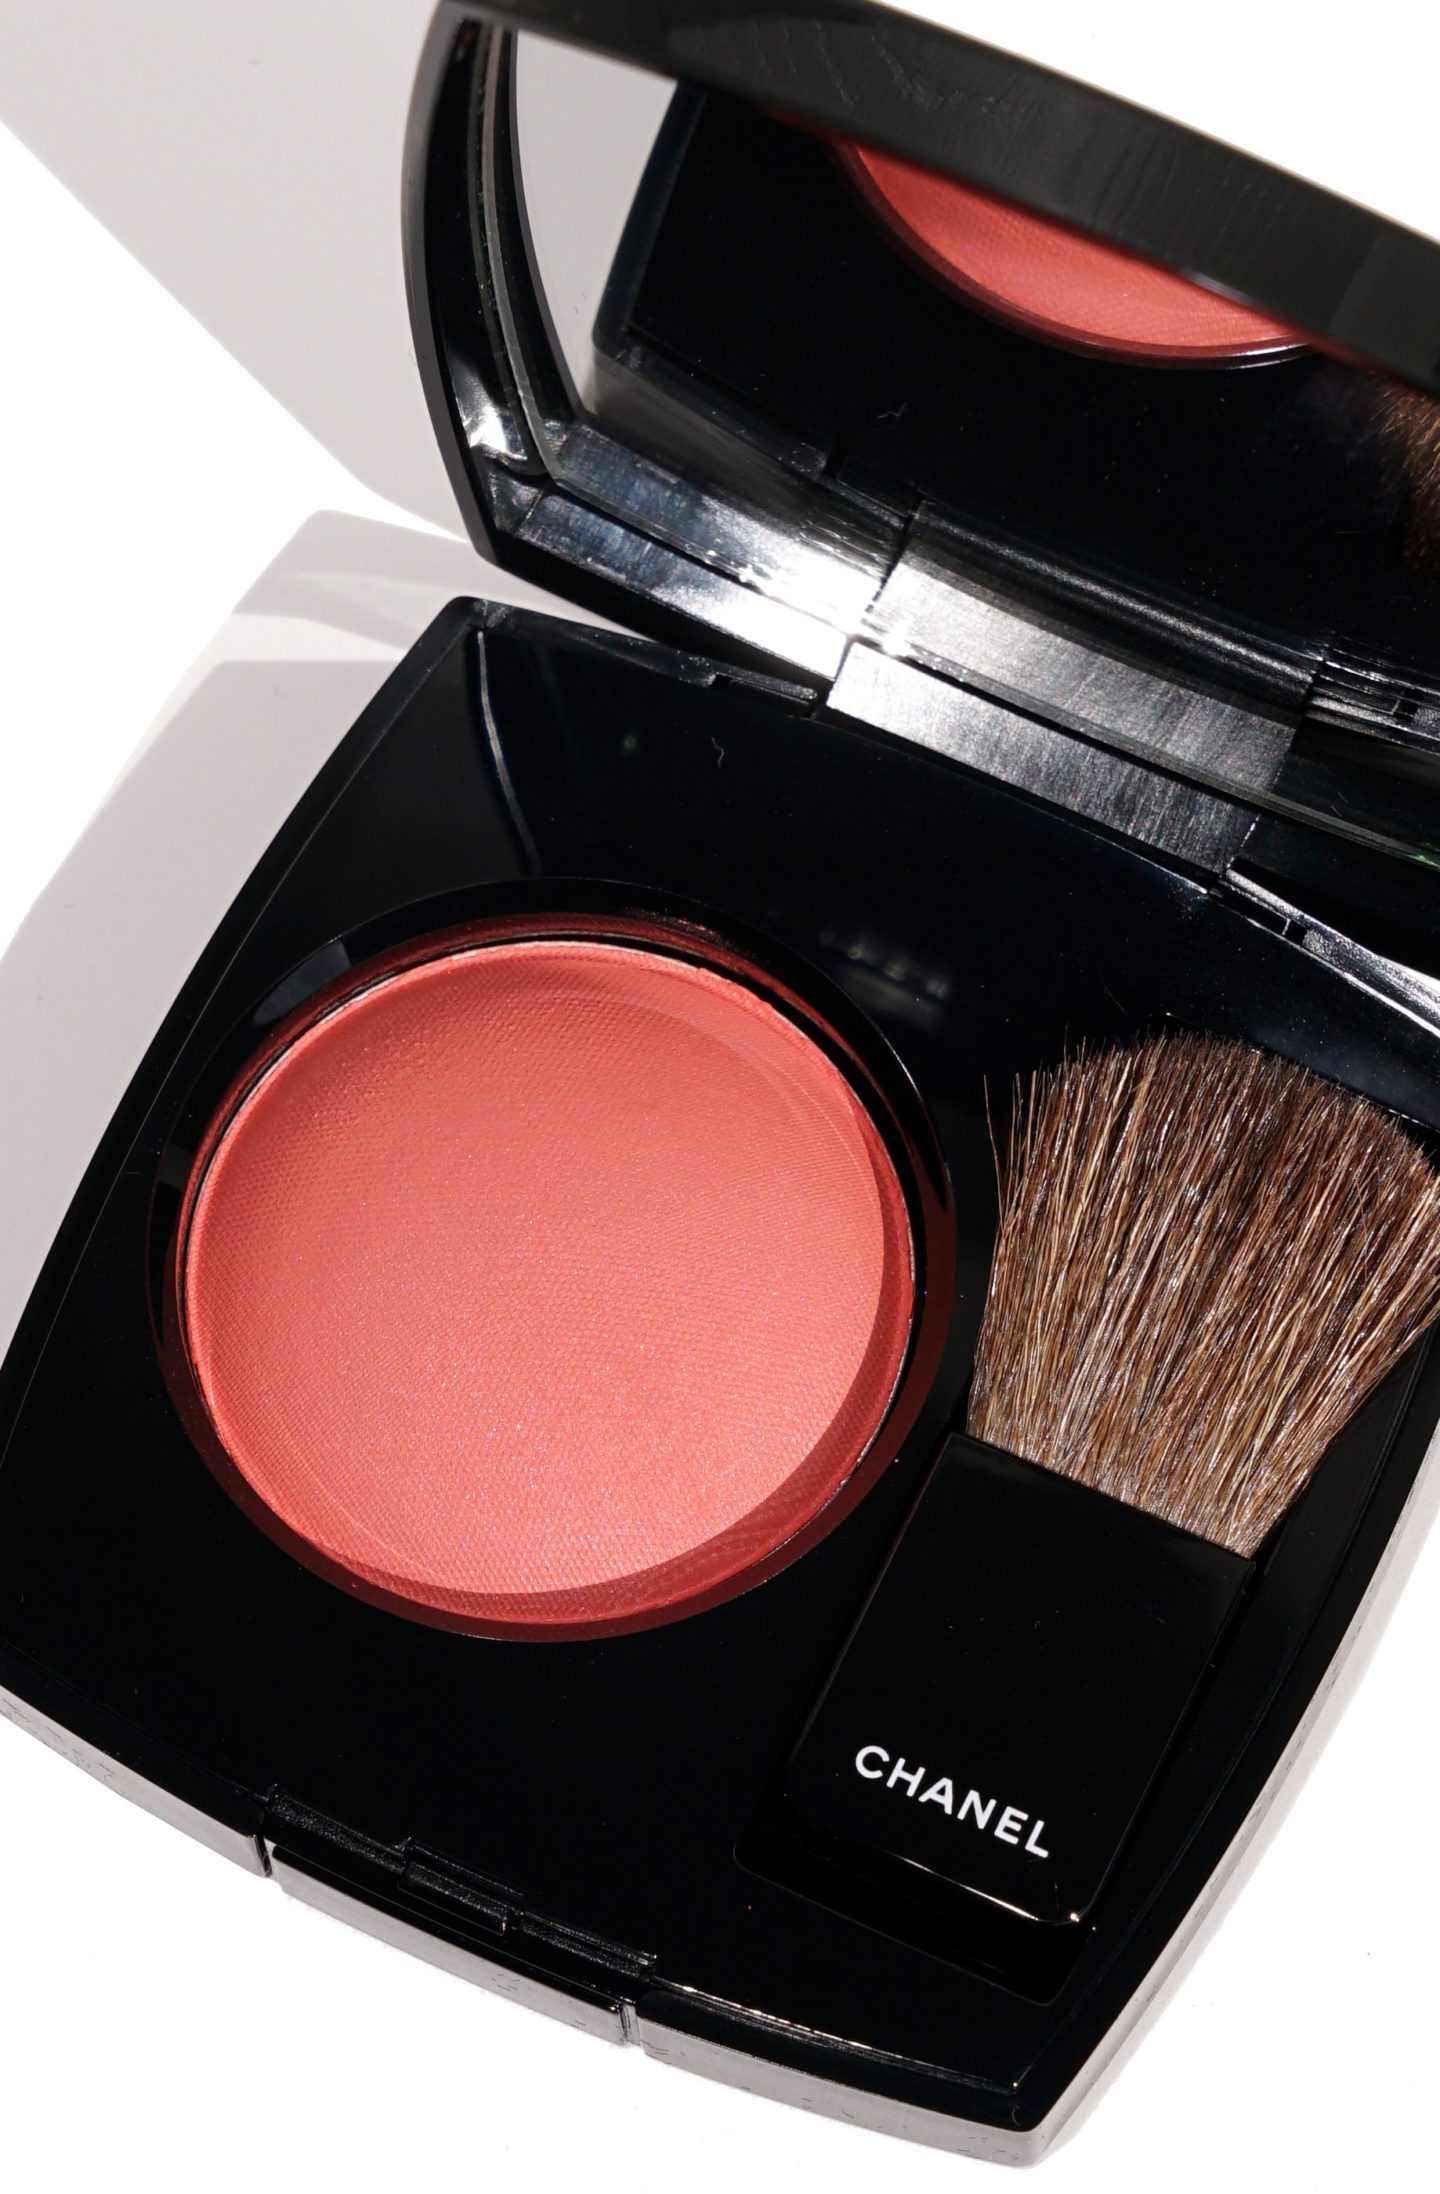 Chanel Joues Contraste Blush Foschia Rosa | The Beauty Look Book